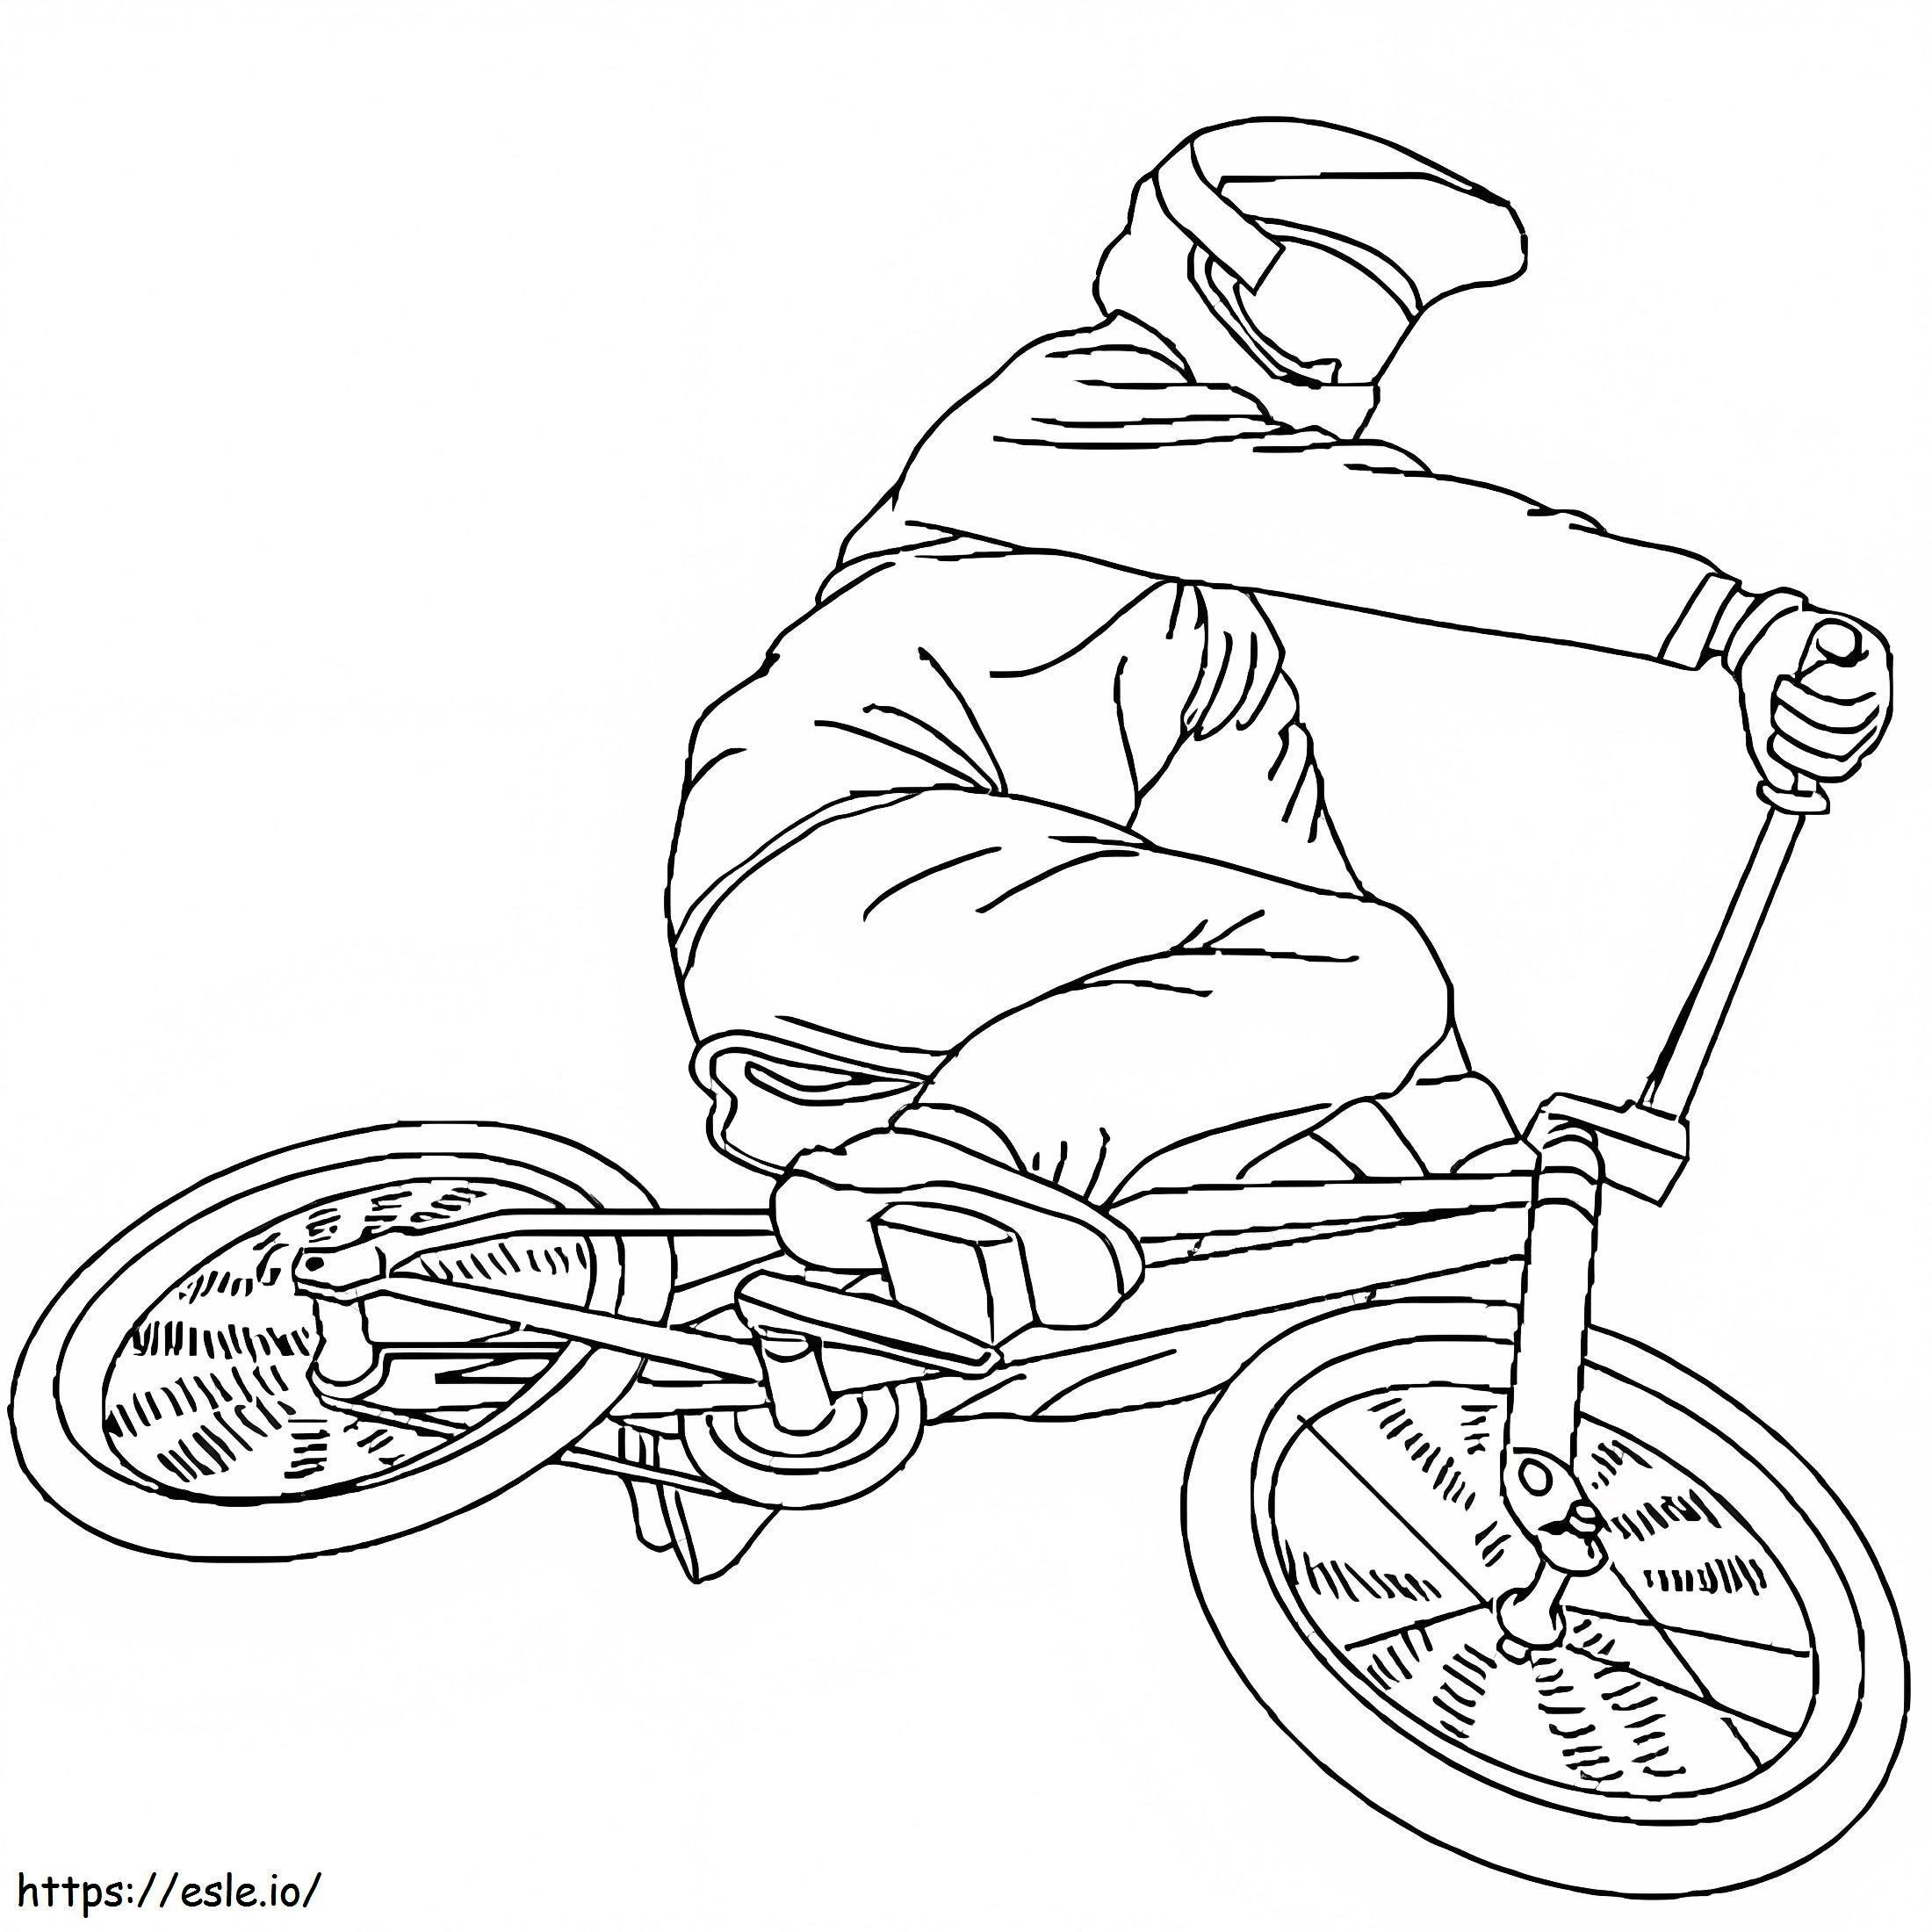 BMX Bike coloring page